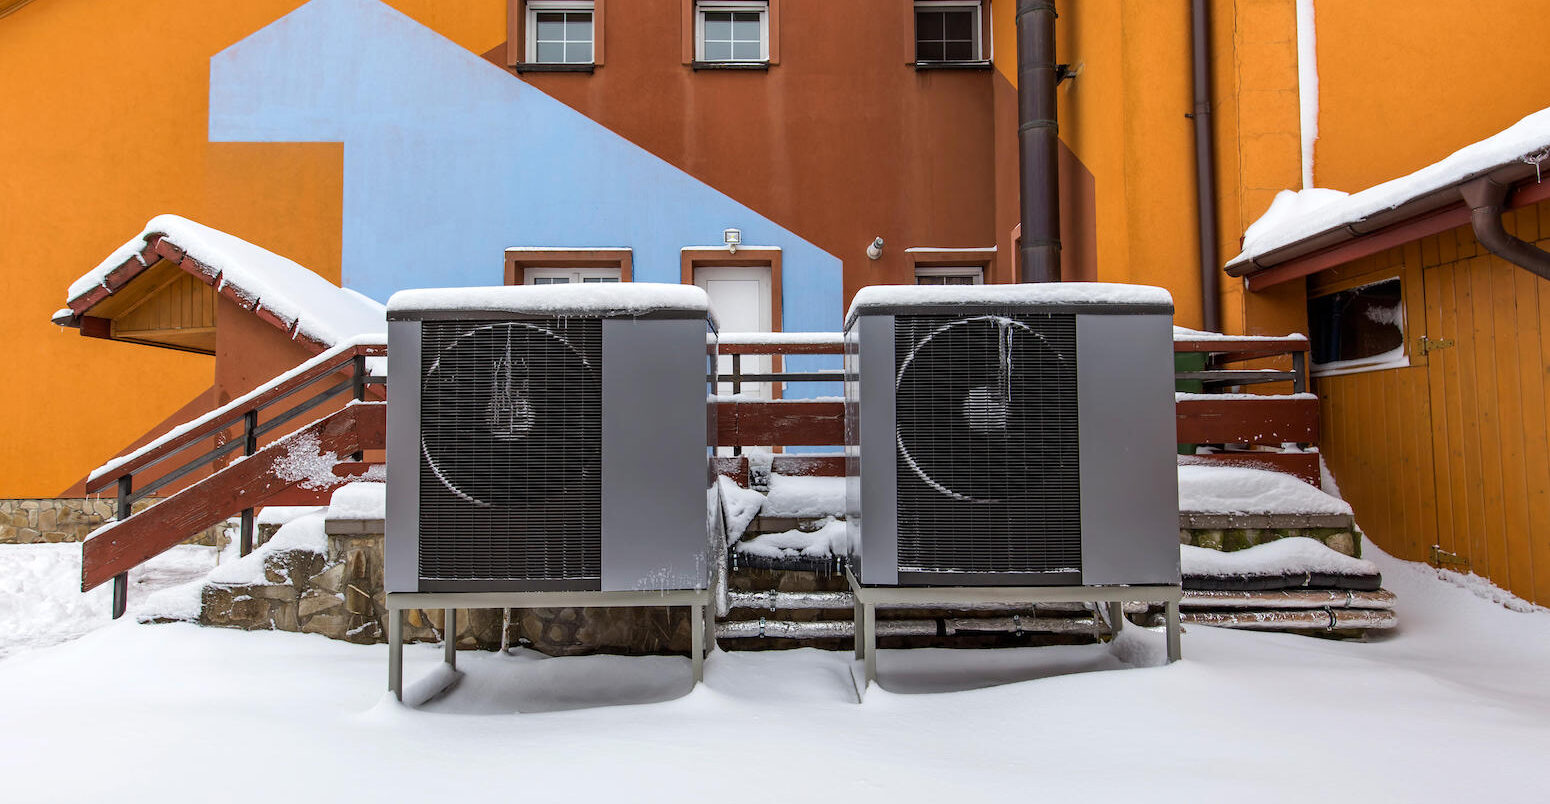 Two residential heat pumps buried in snow. Credit: Radu Sebastian / Alamy Stock Photo